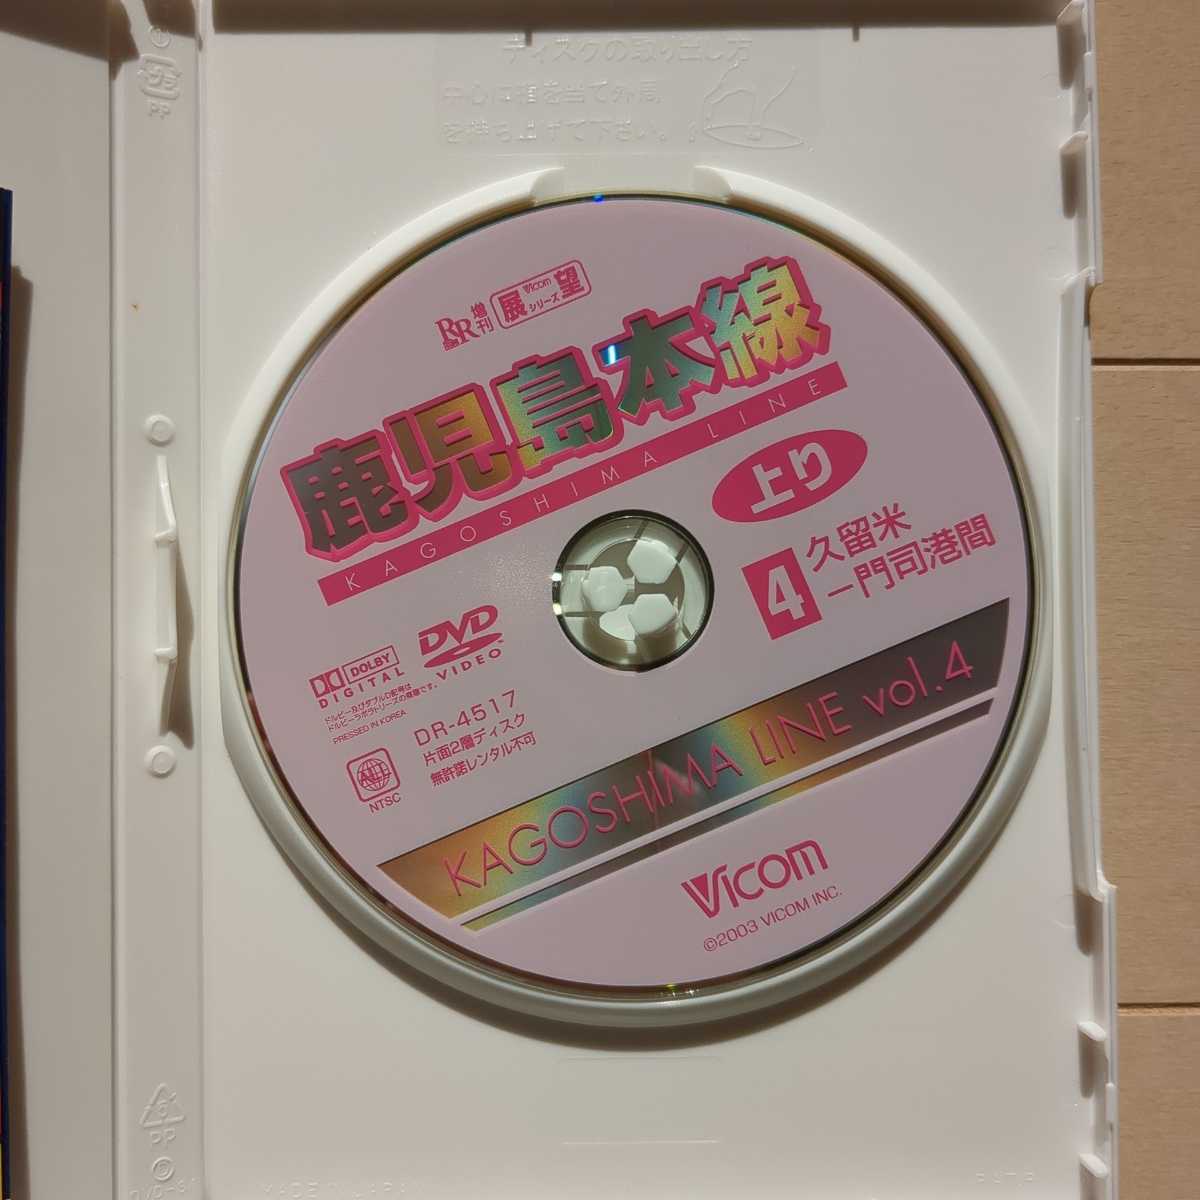 DVD 鉄道DVD 鹿児島本線上り(4)久留米-門司港間 ビコム cmdcluj.ro